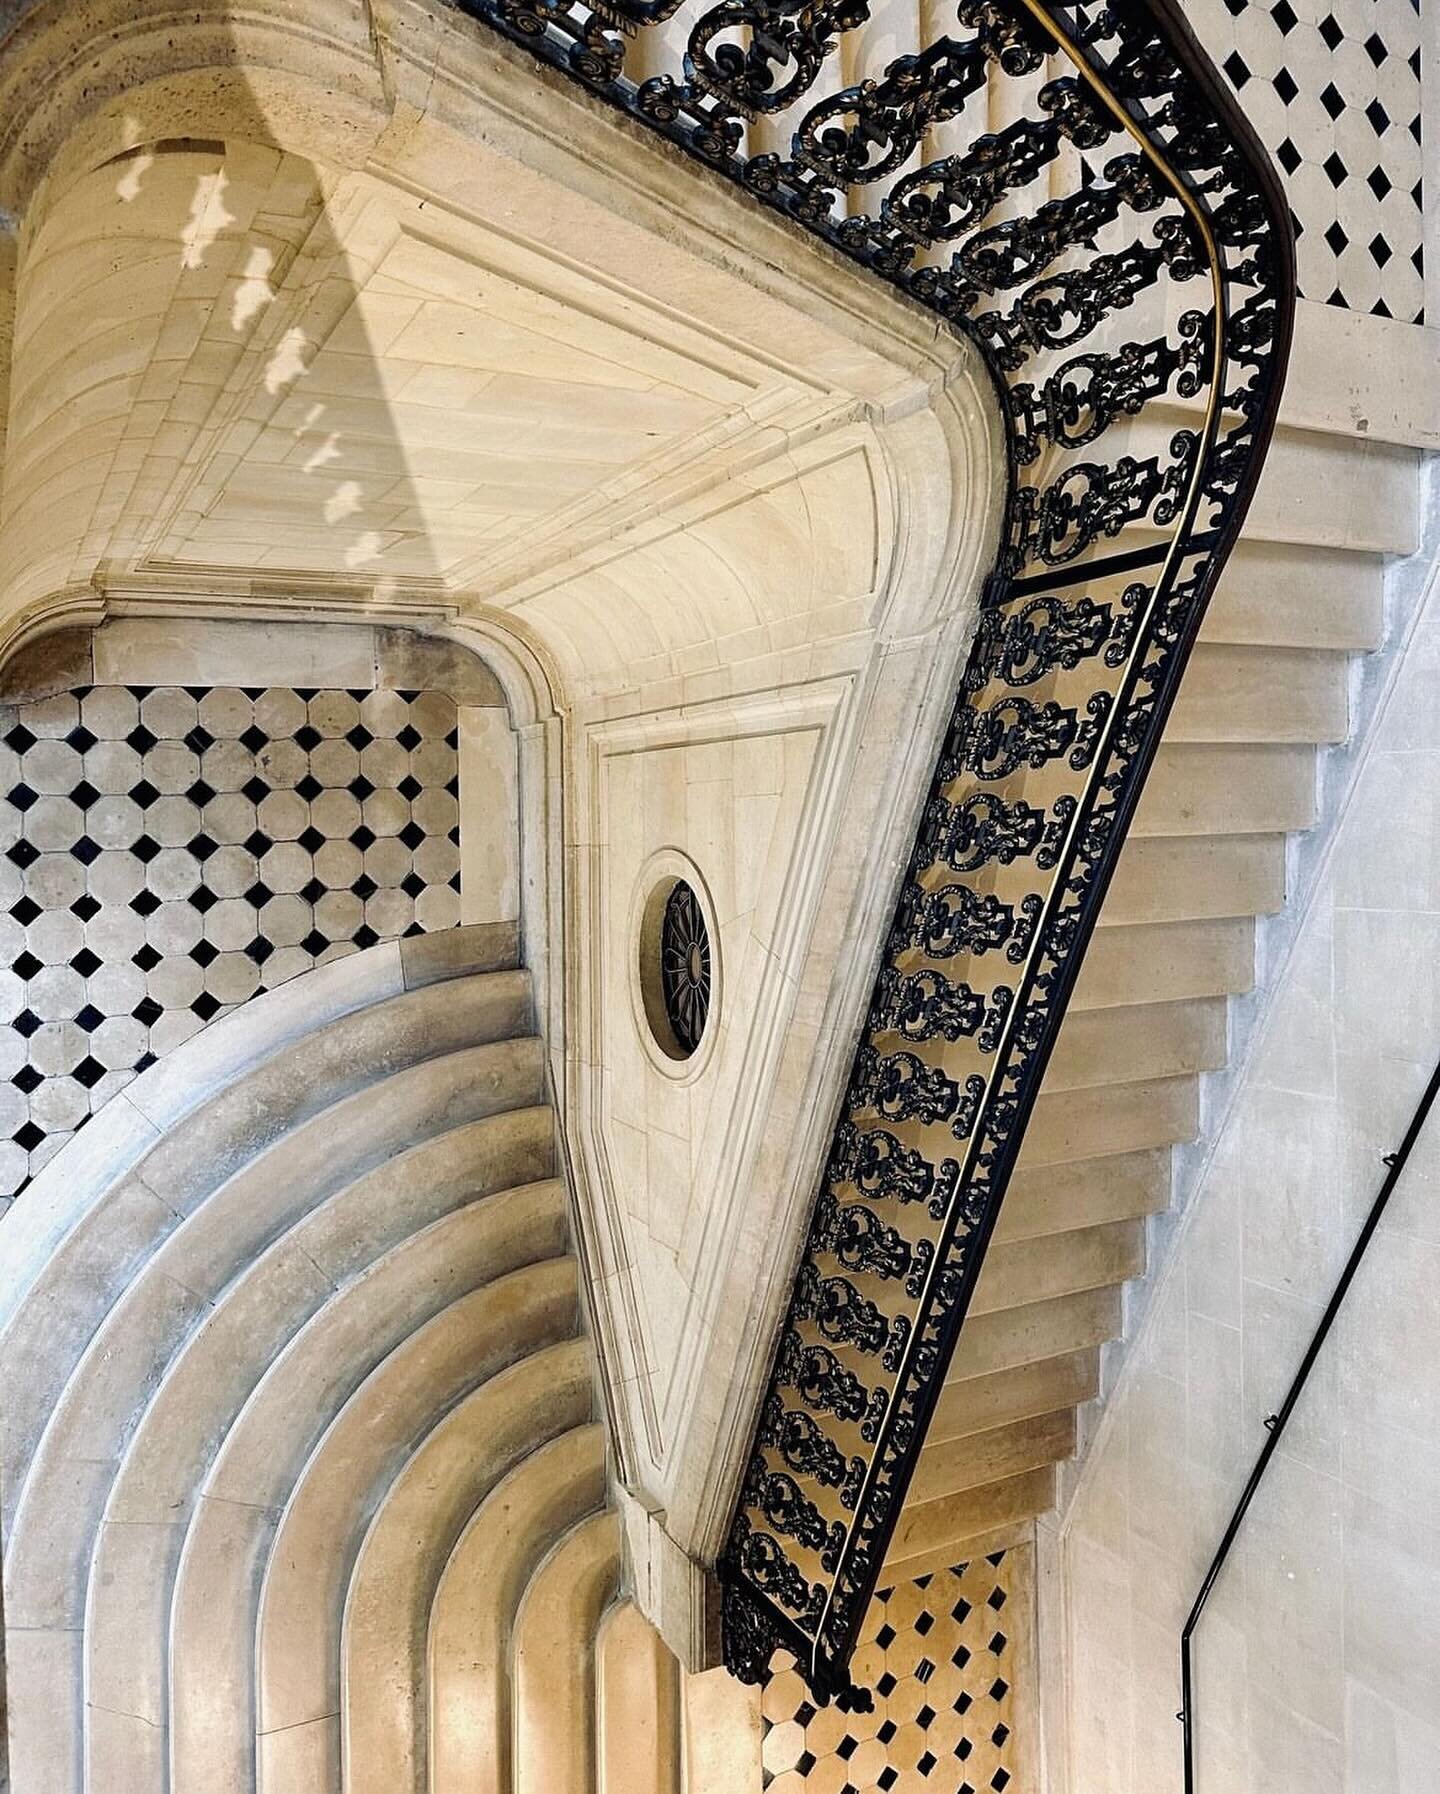 17th century Staircase in the Mus&eacute;e Carnavalet, Paris
@travelandculturesalon 

#pattern #design #staircase #museecarnavalet #blackandwhite #interior #designinspiration #patterninspiration #blackandwhitepattern